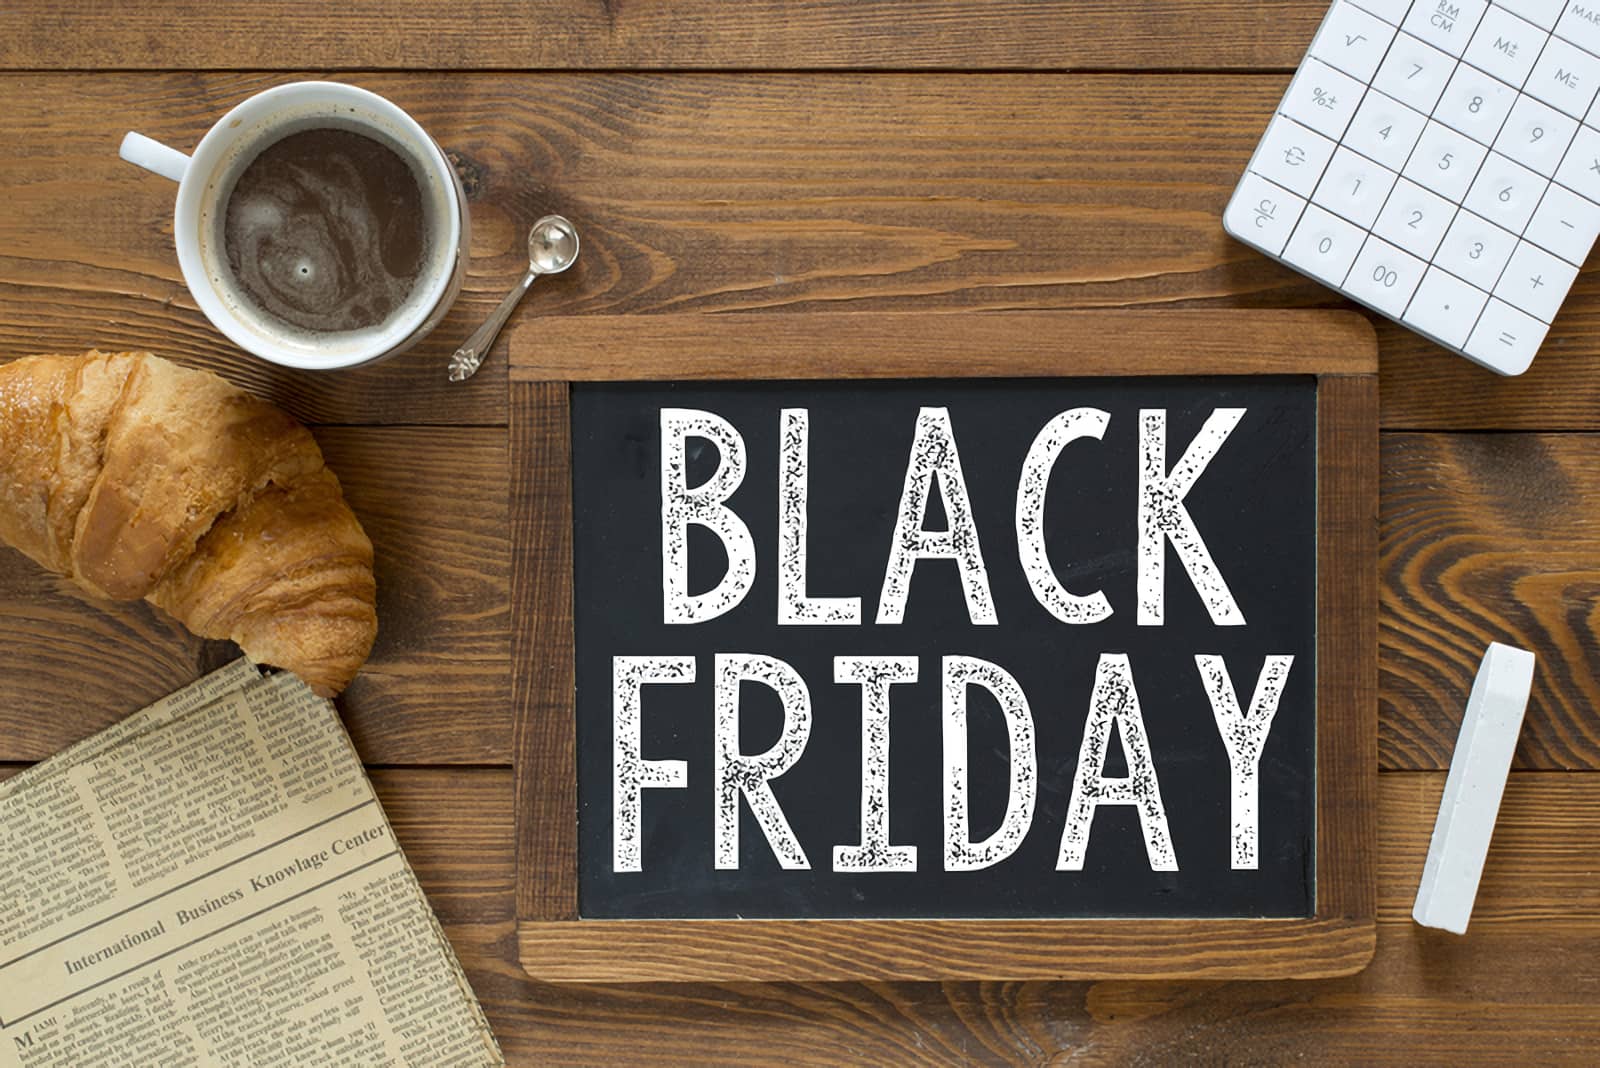 Save money on Black Friday - 7 tips